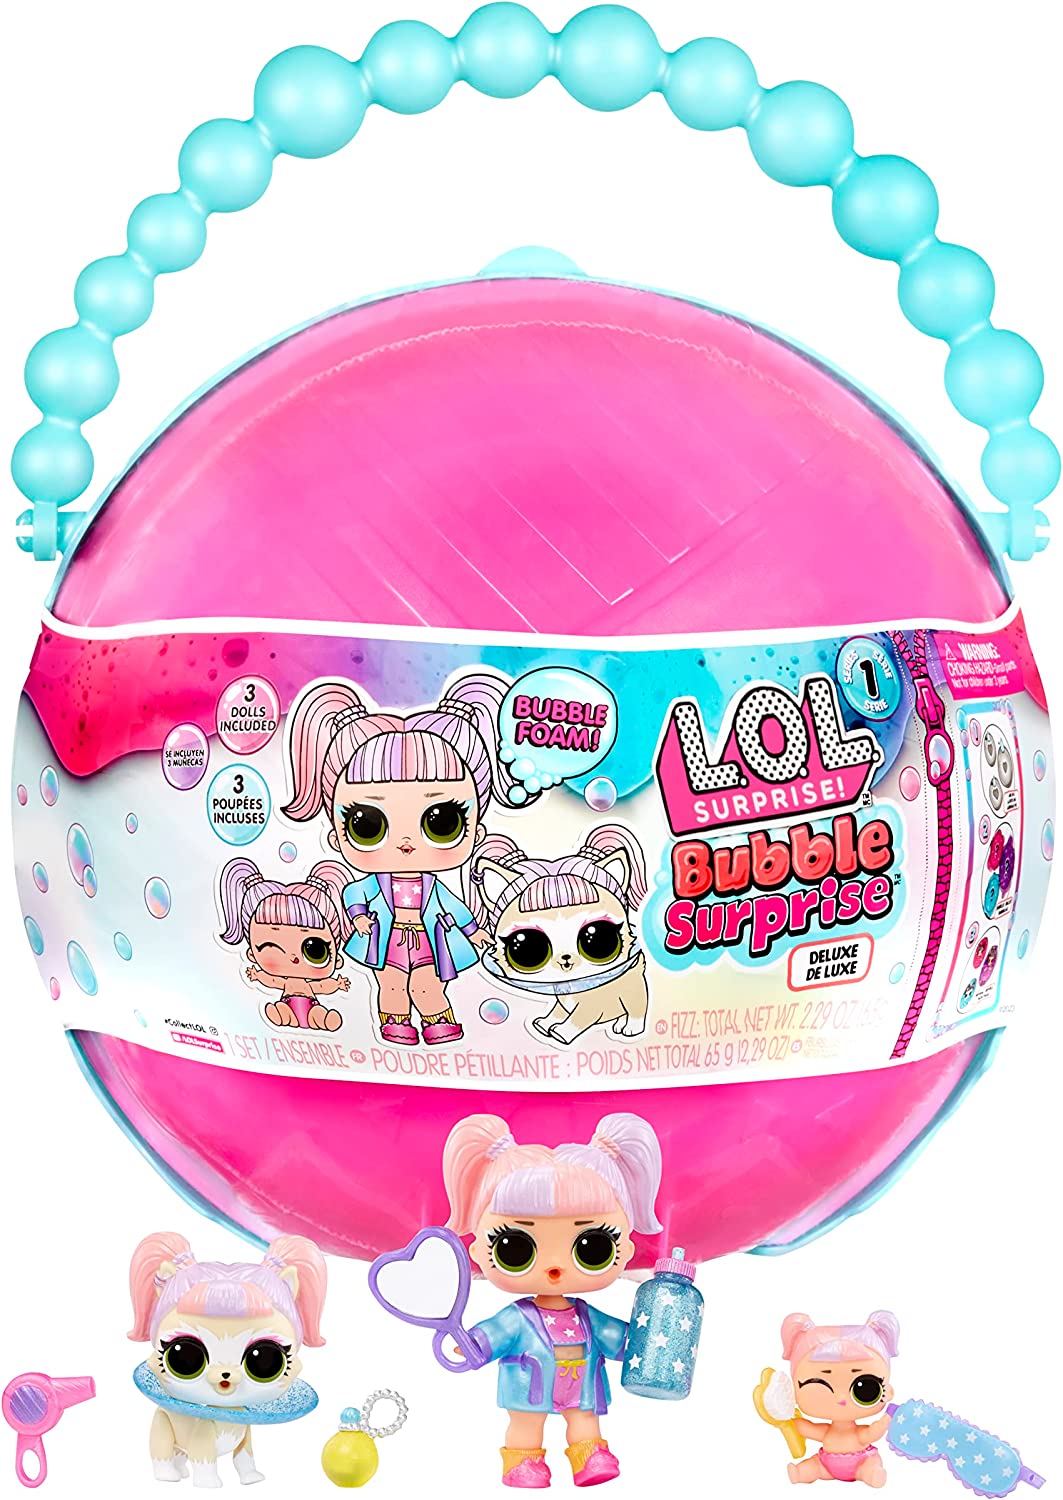 LOL Surprise Bubble Surprise Deluxe – Sammelpuppen, Haustier, kleine Schwester, Surpr